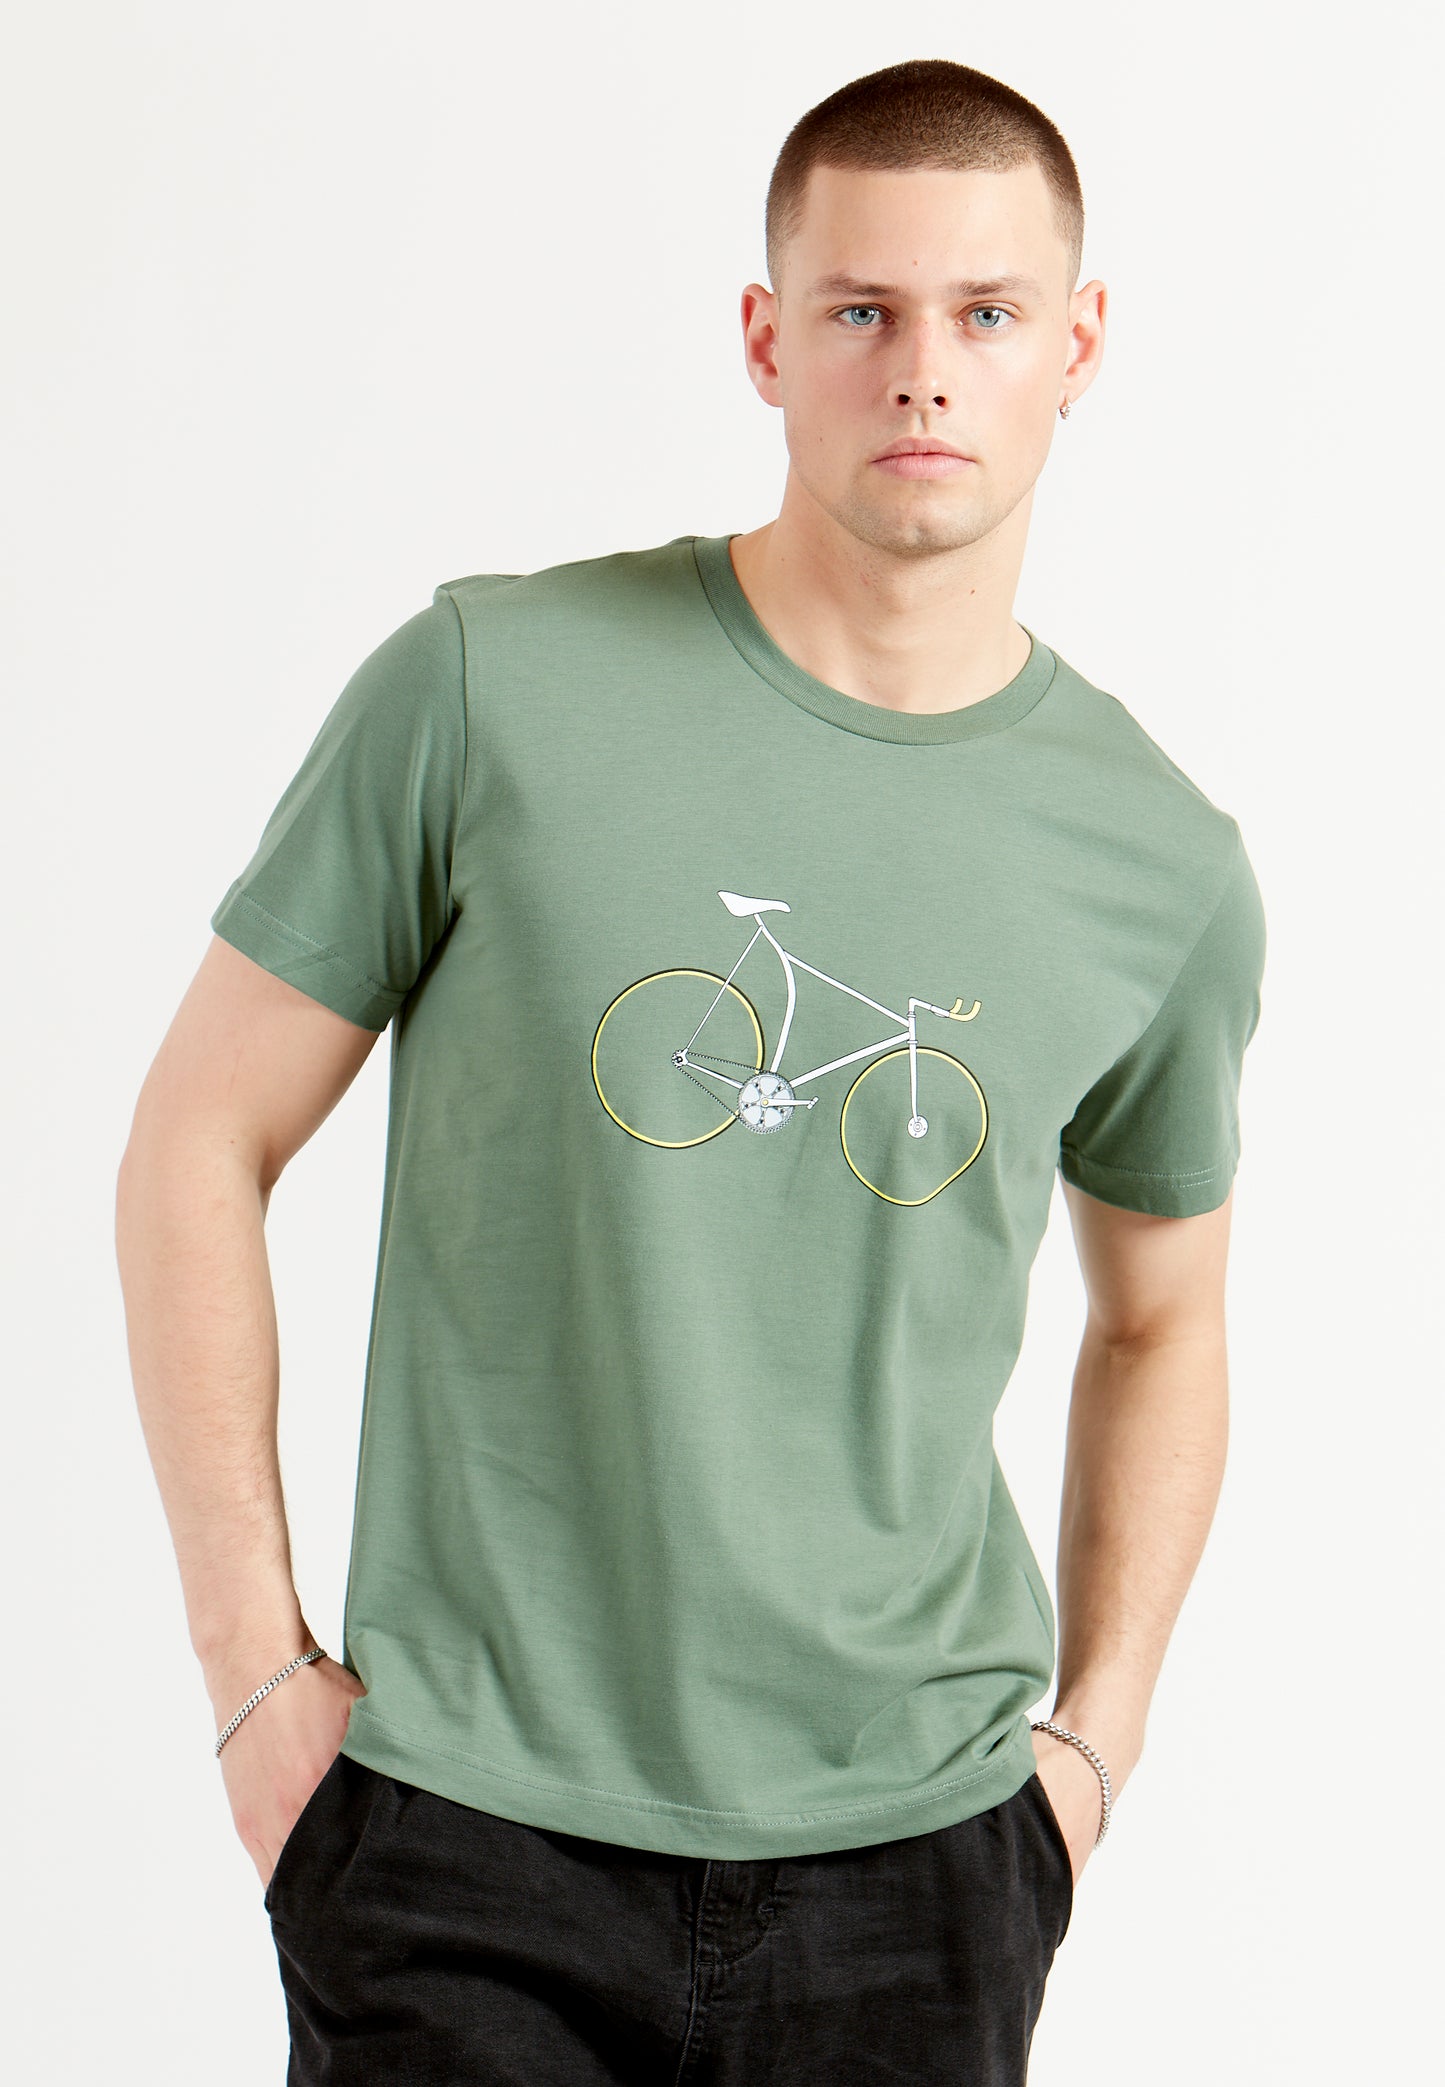 Un’ora-51.15 - hour record bike T-Shirt